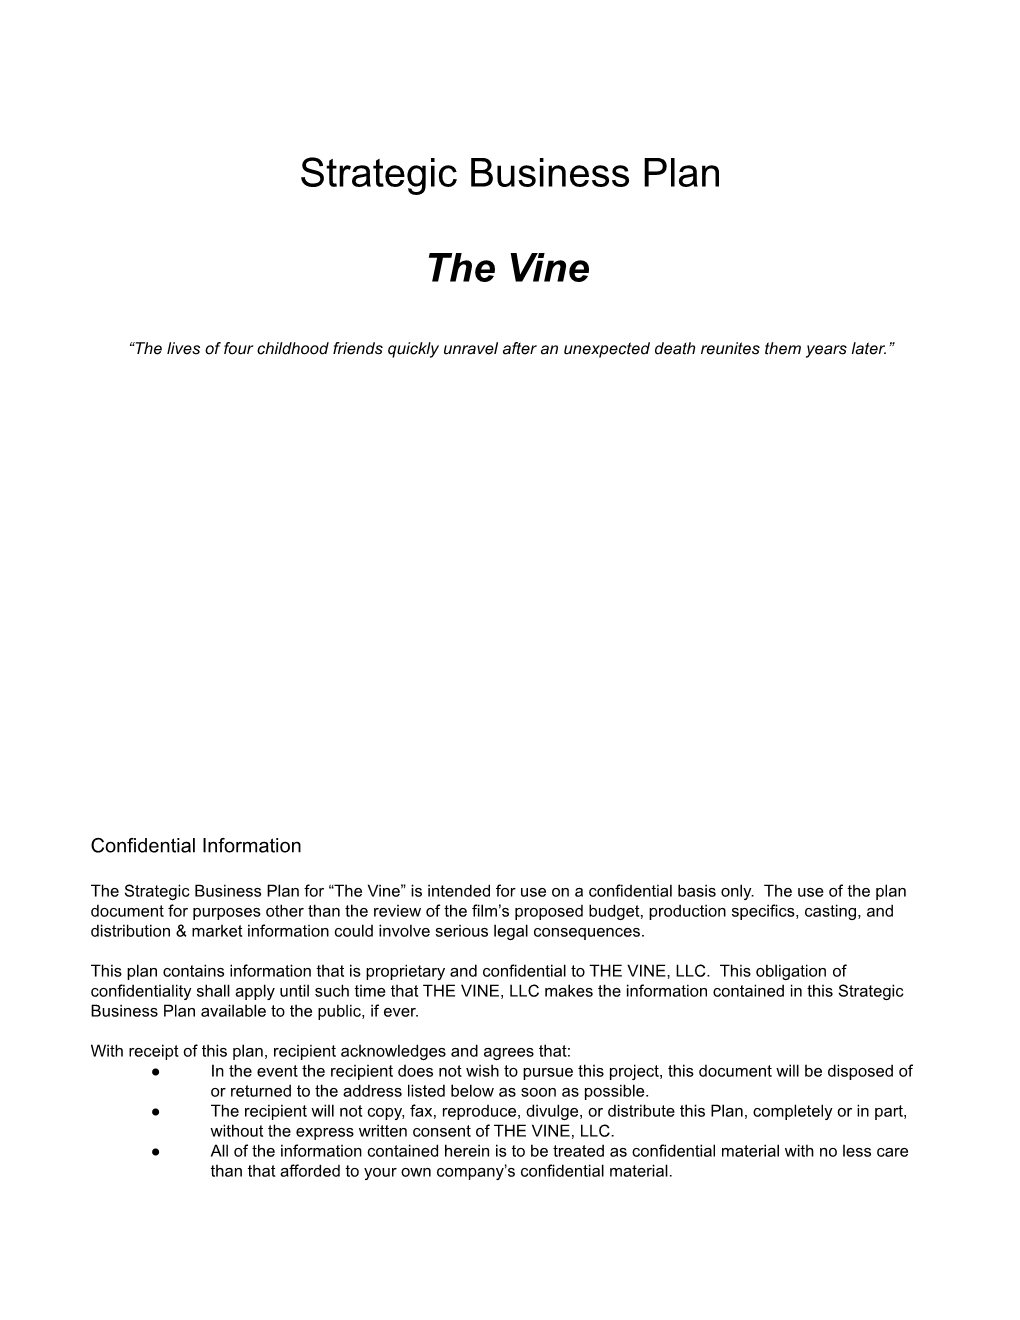 The Vine Strategic Business Plan 12-24-2019.Docx